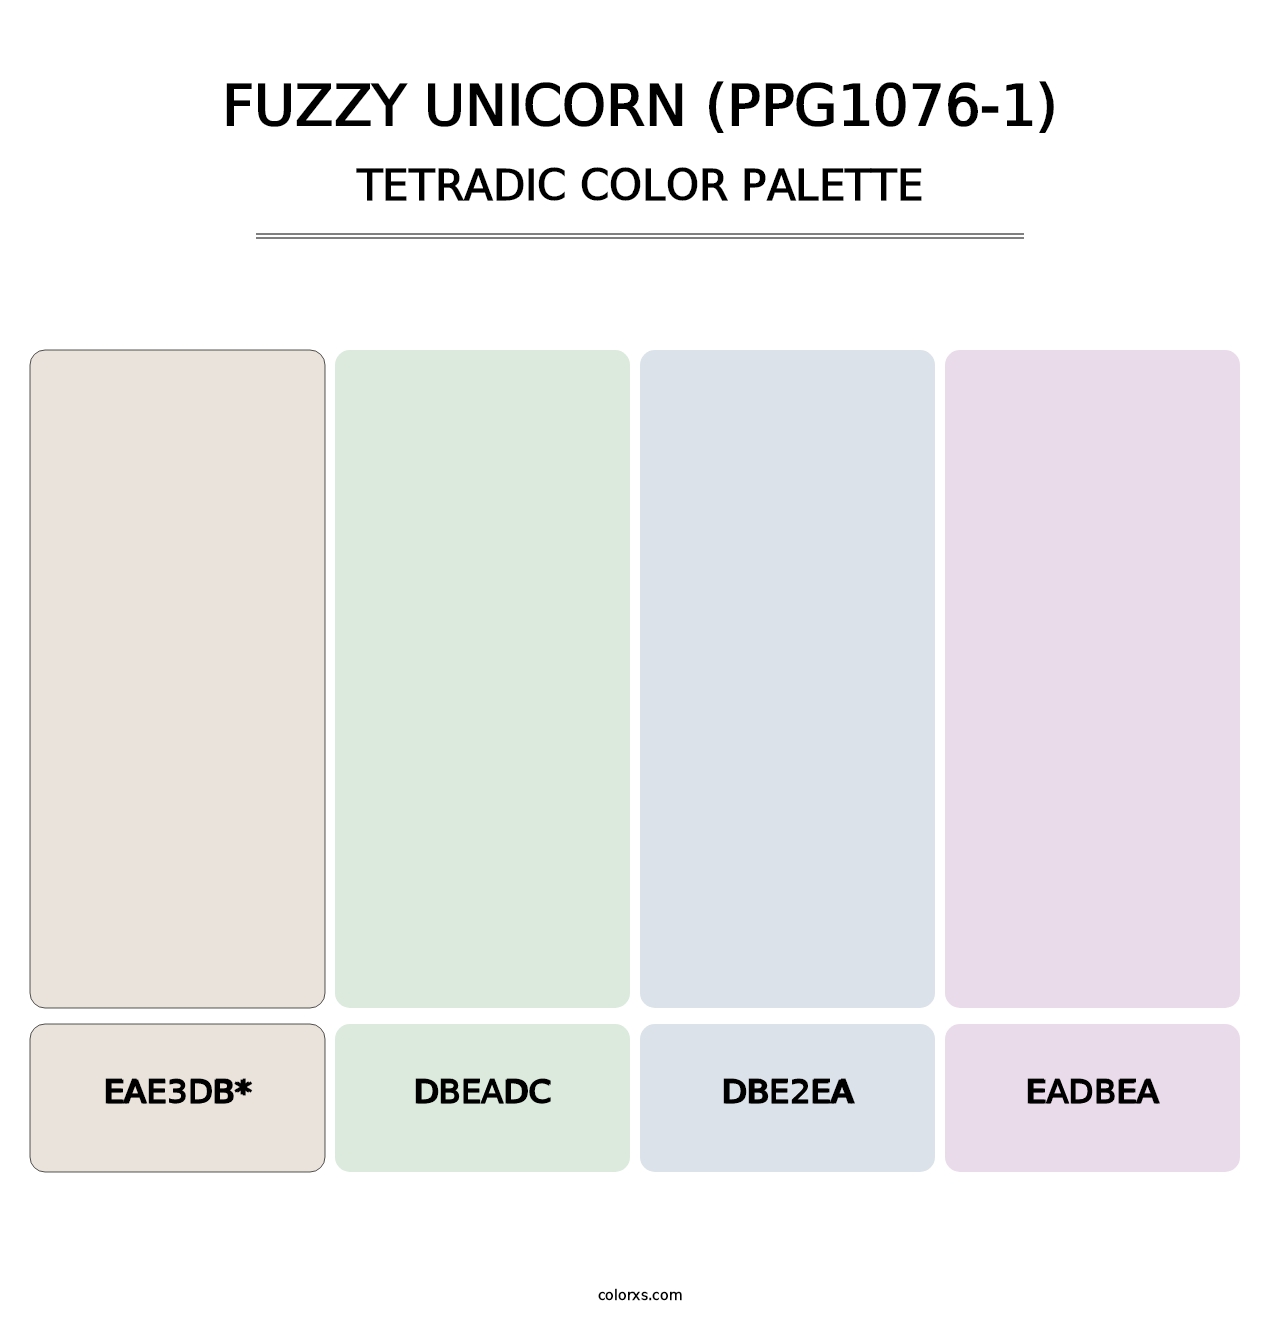 Fuzzy Unicorn (PPG1076-1) - Tetradic Color Palette